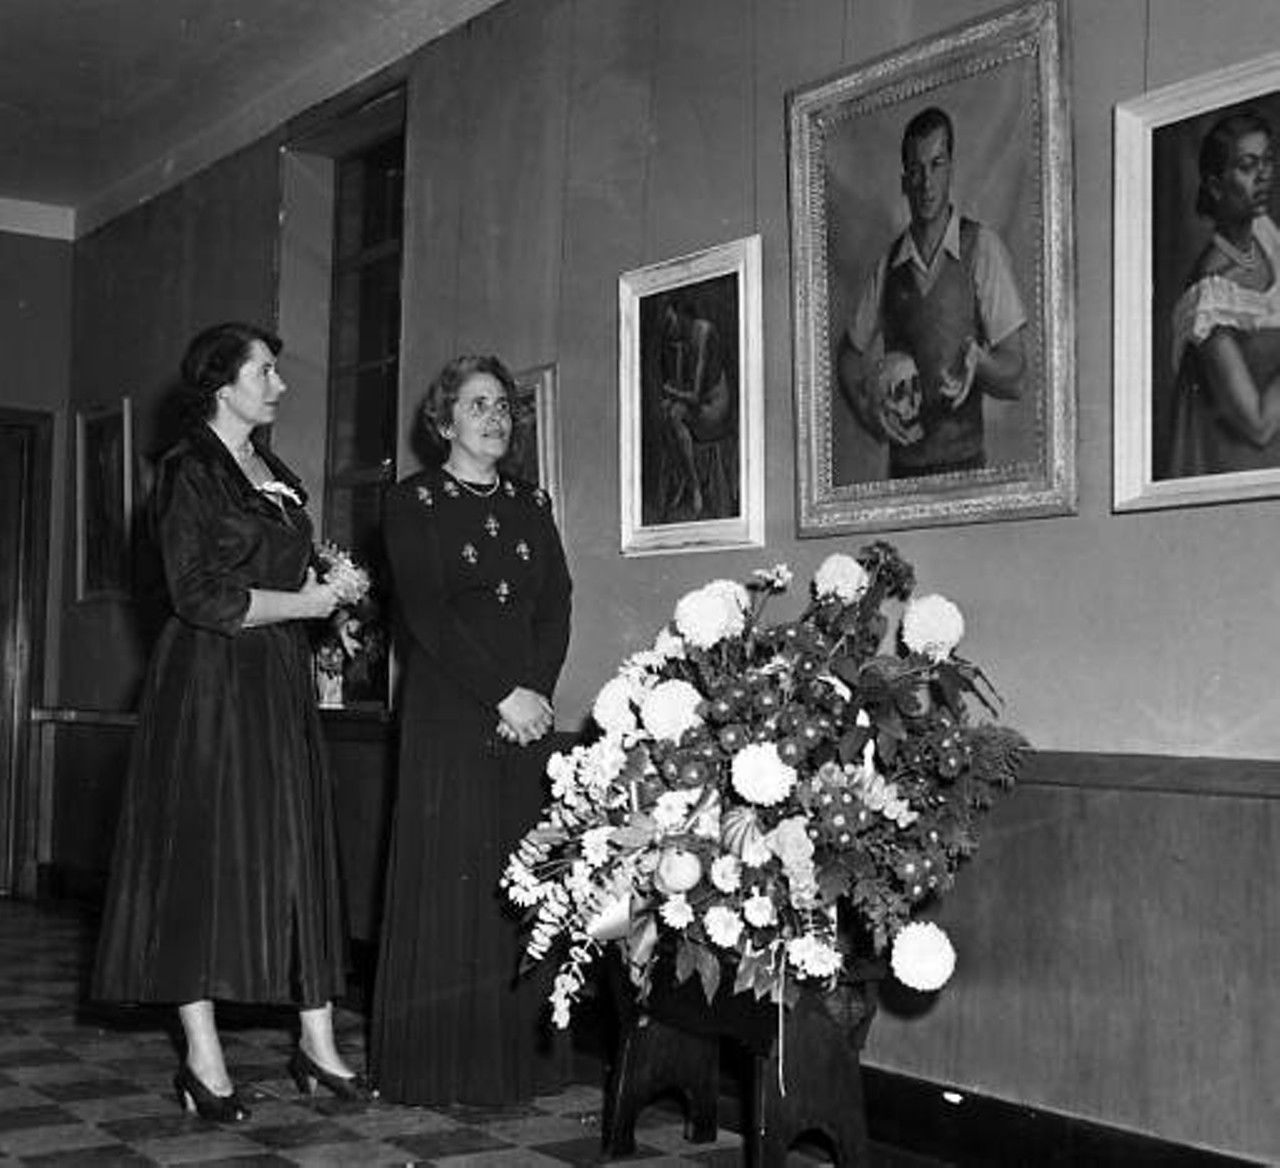 Admiring art at Karamu House, 1949